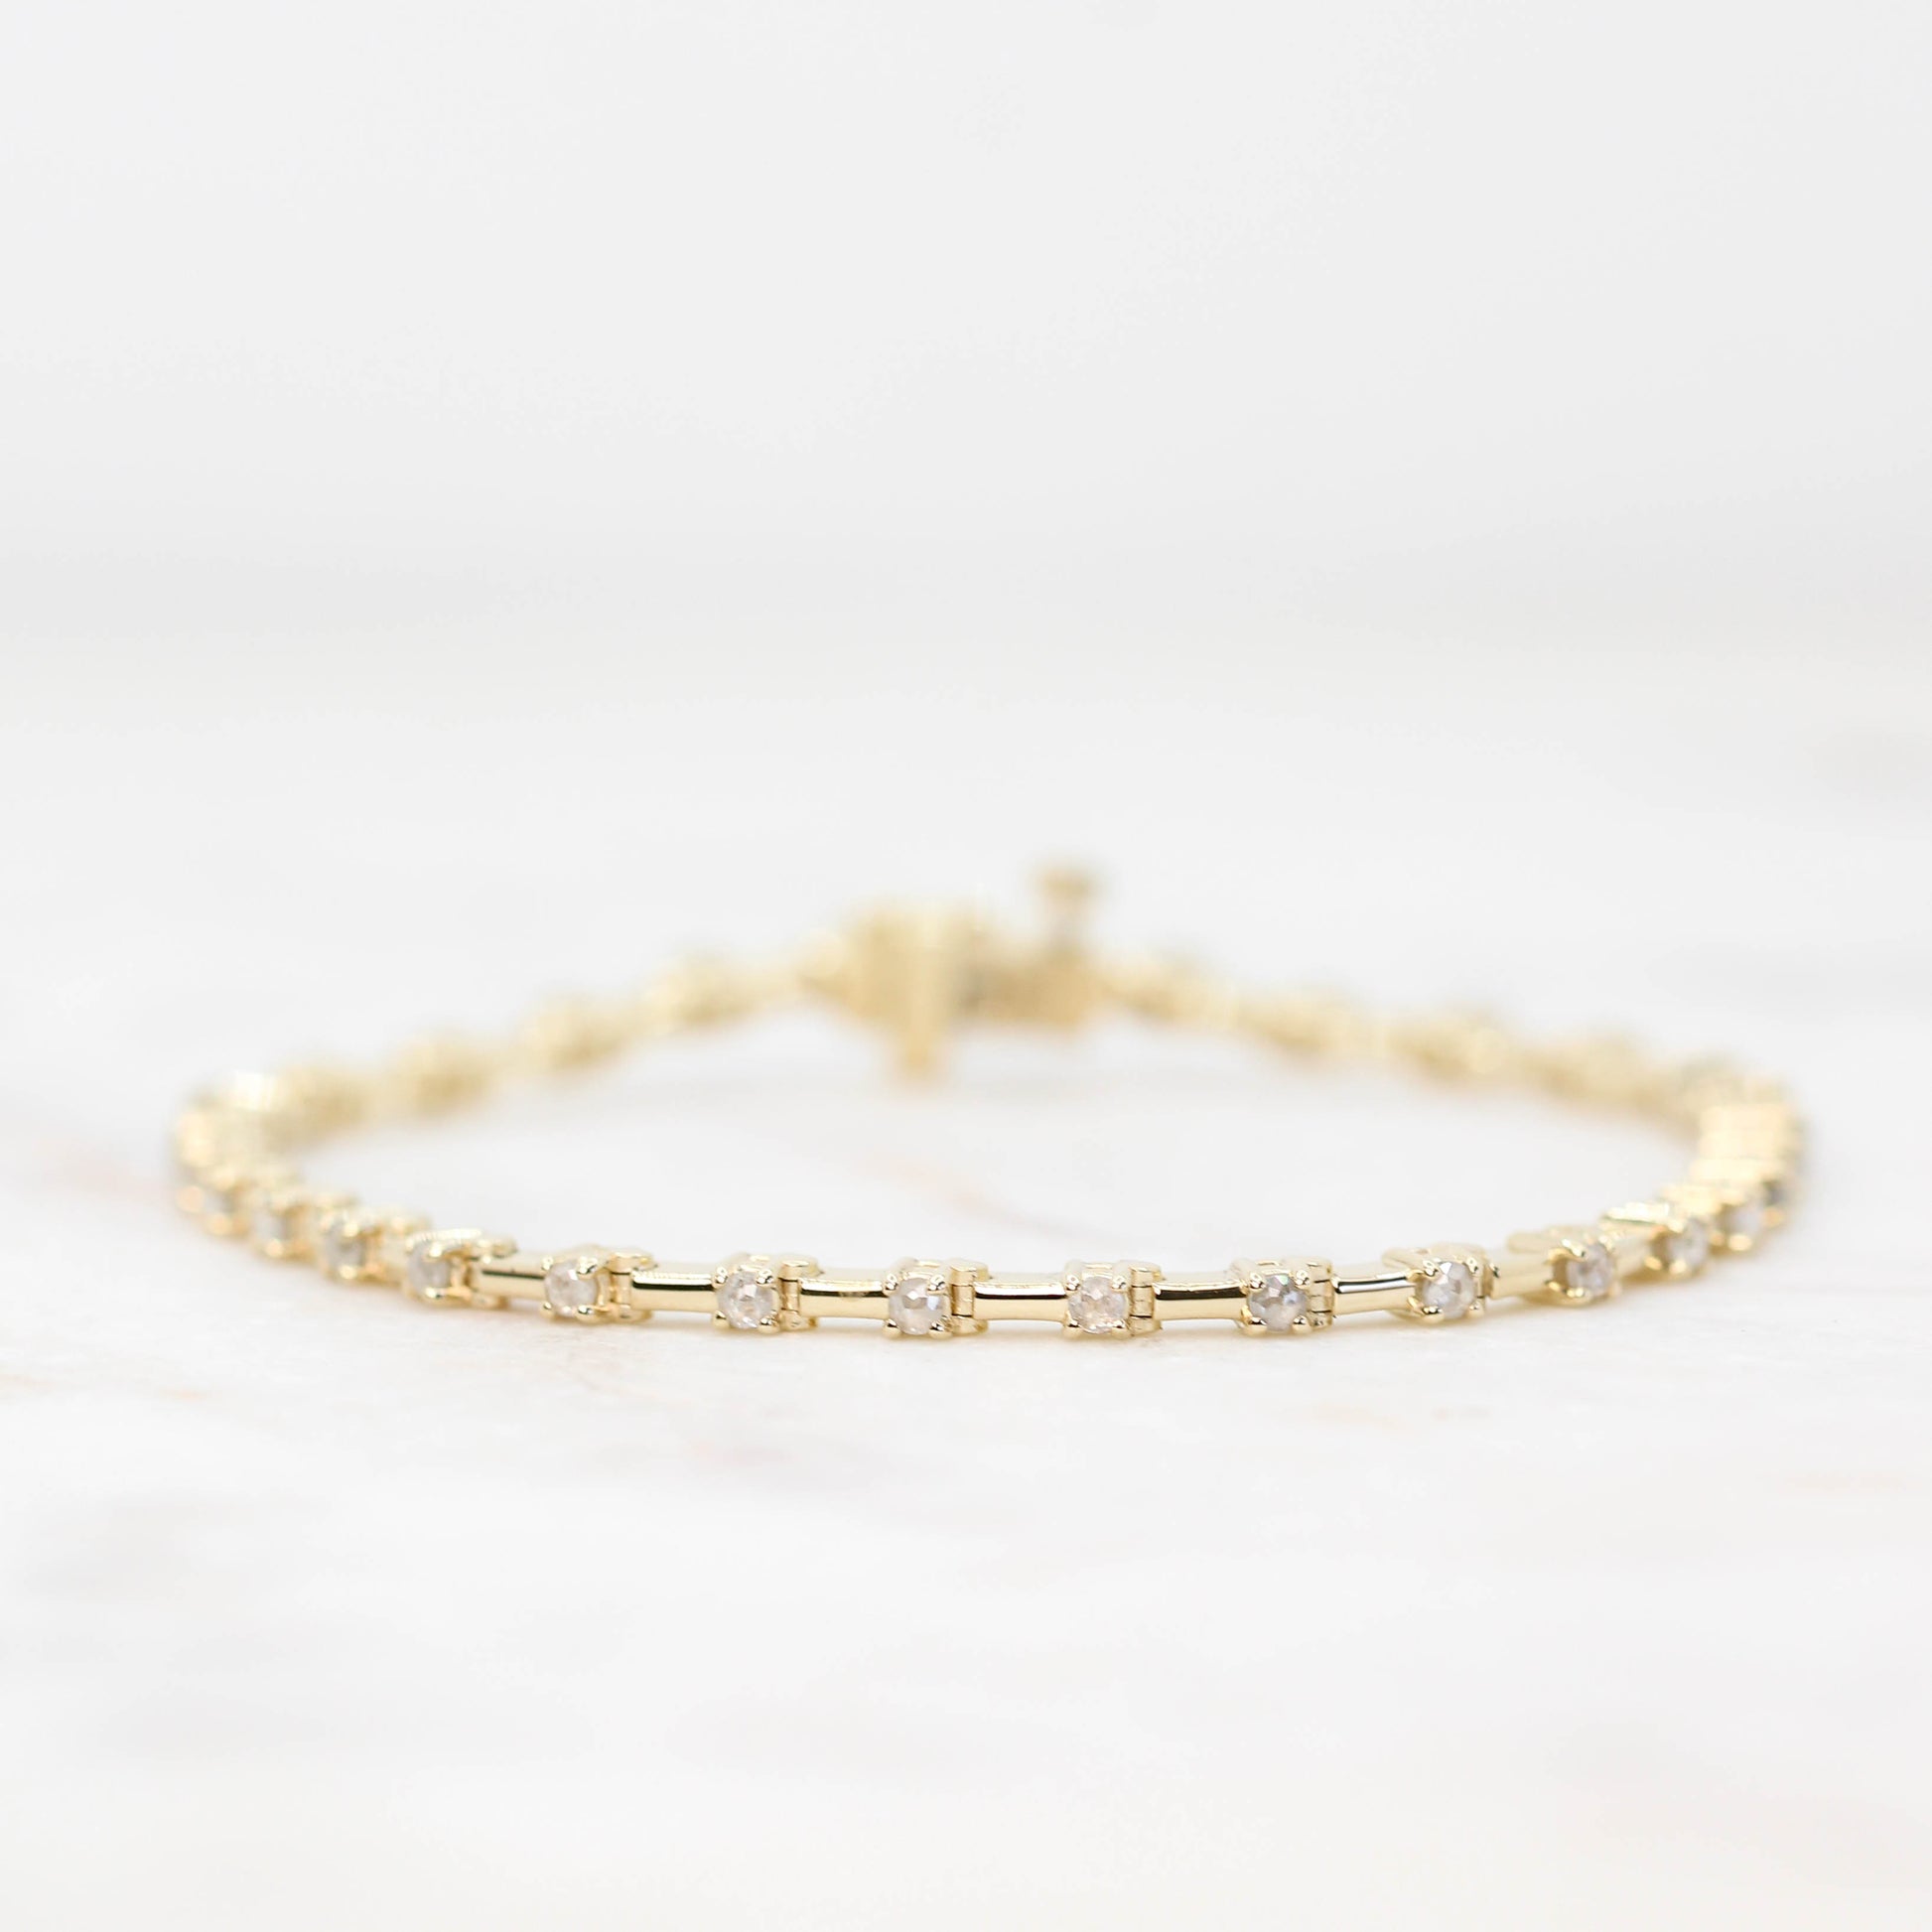 Wispy Rose Cut Modern Bar Link Diamond Stacking Bracelet in 14k Yellow Gold - Midwinter Co. Alternative Bridal Rings and Modern Fine Jewelry